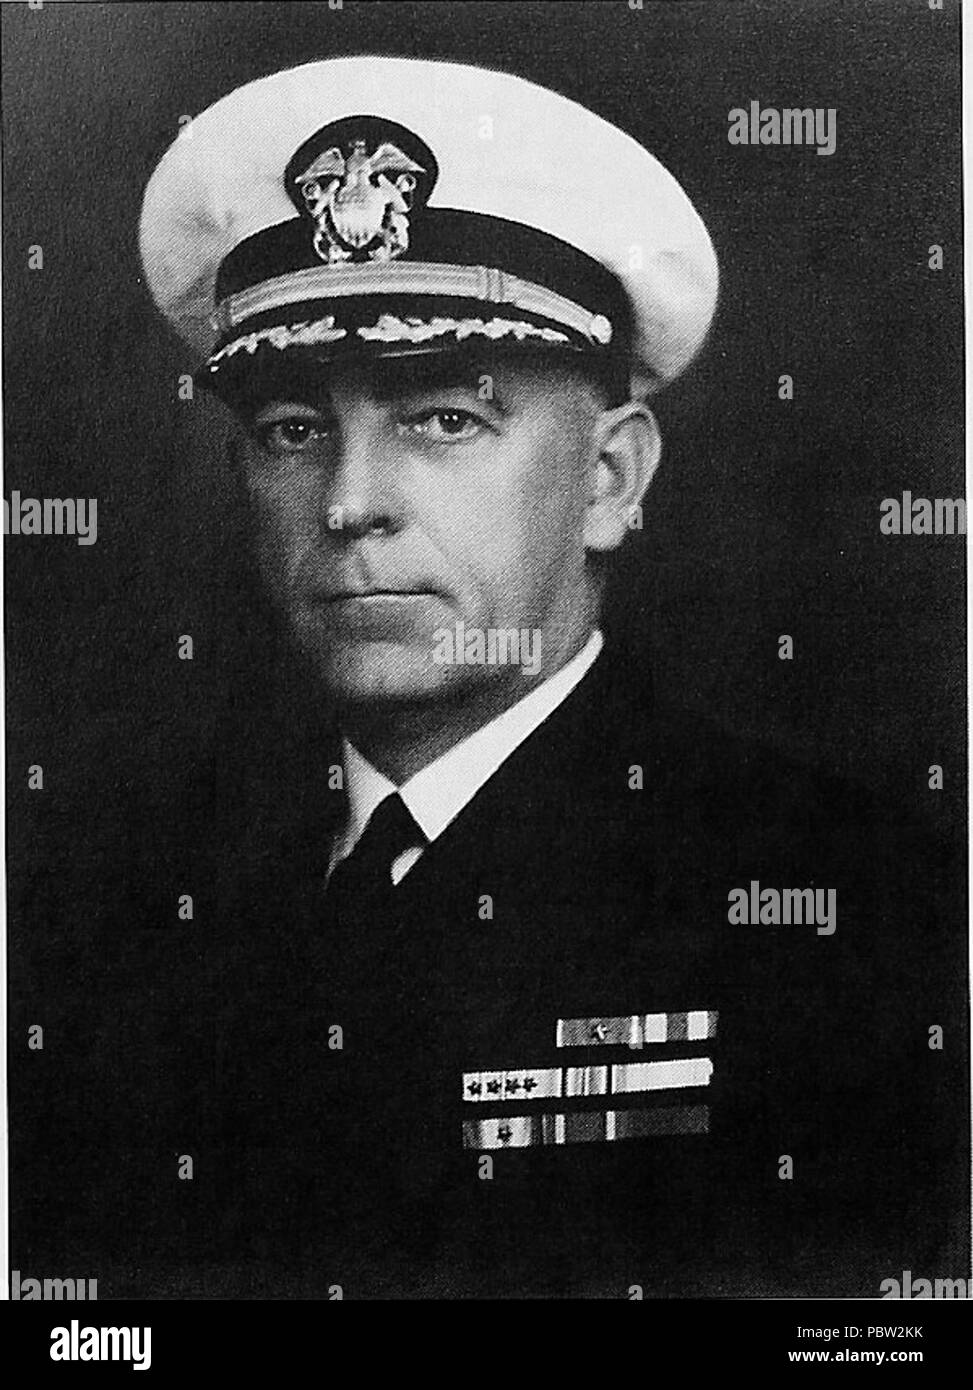 Admiral Robert Briscoe from 2000 USS Briscoe Cruisebook. Stock Photo